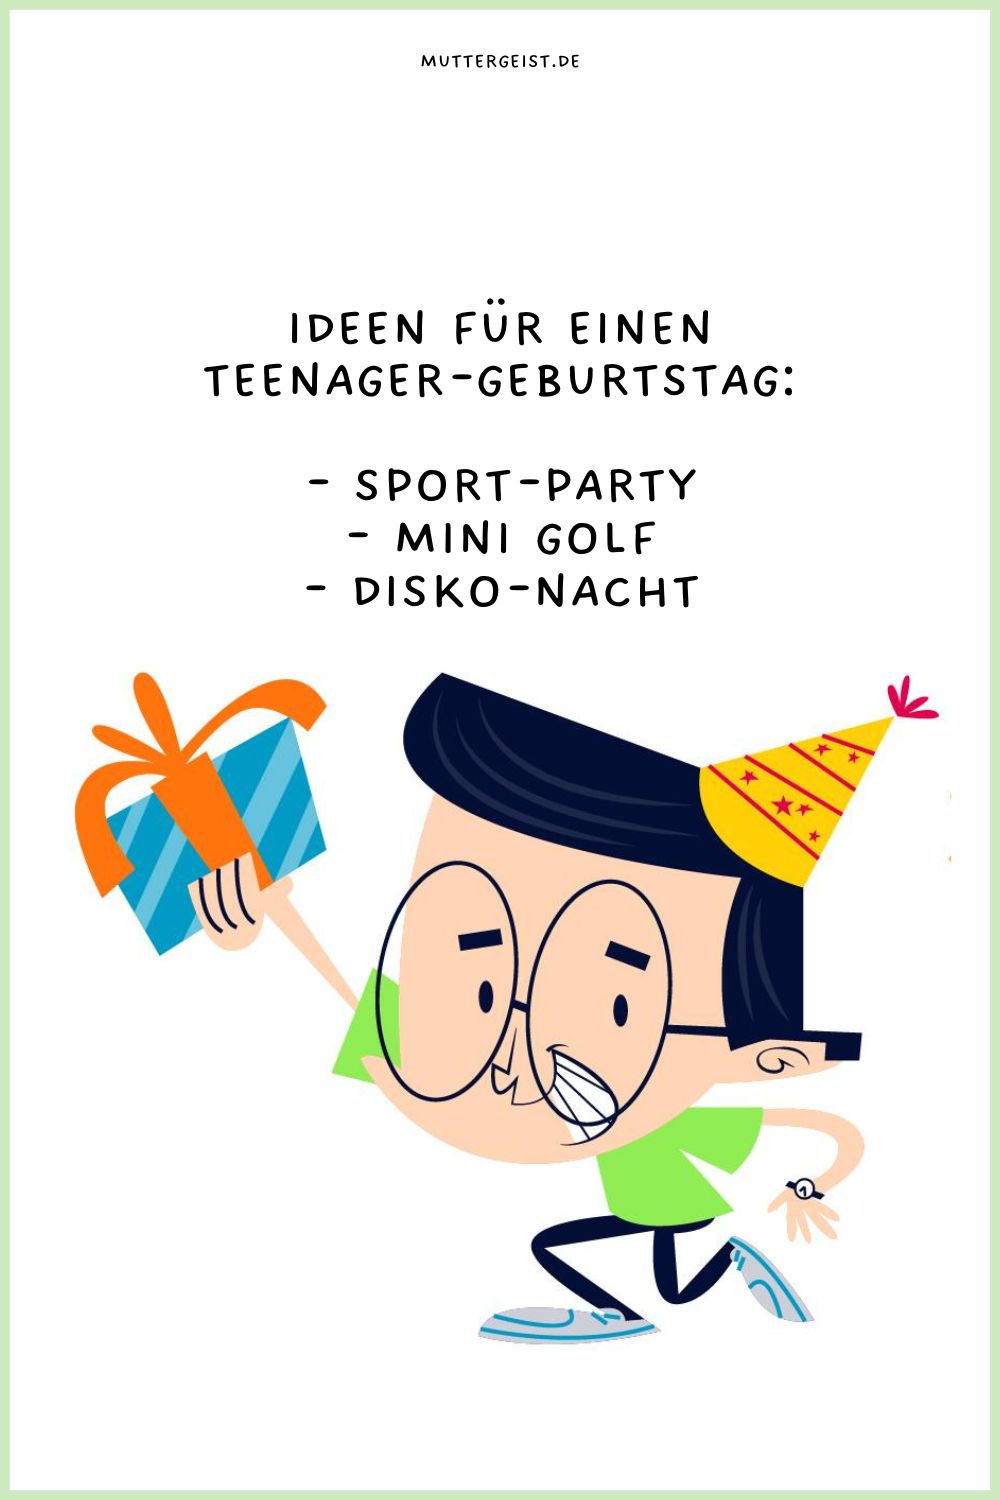 Sport-Party, Mini Golf, Disko-Nacht